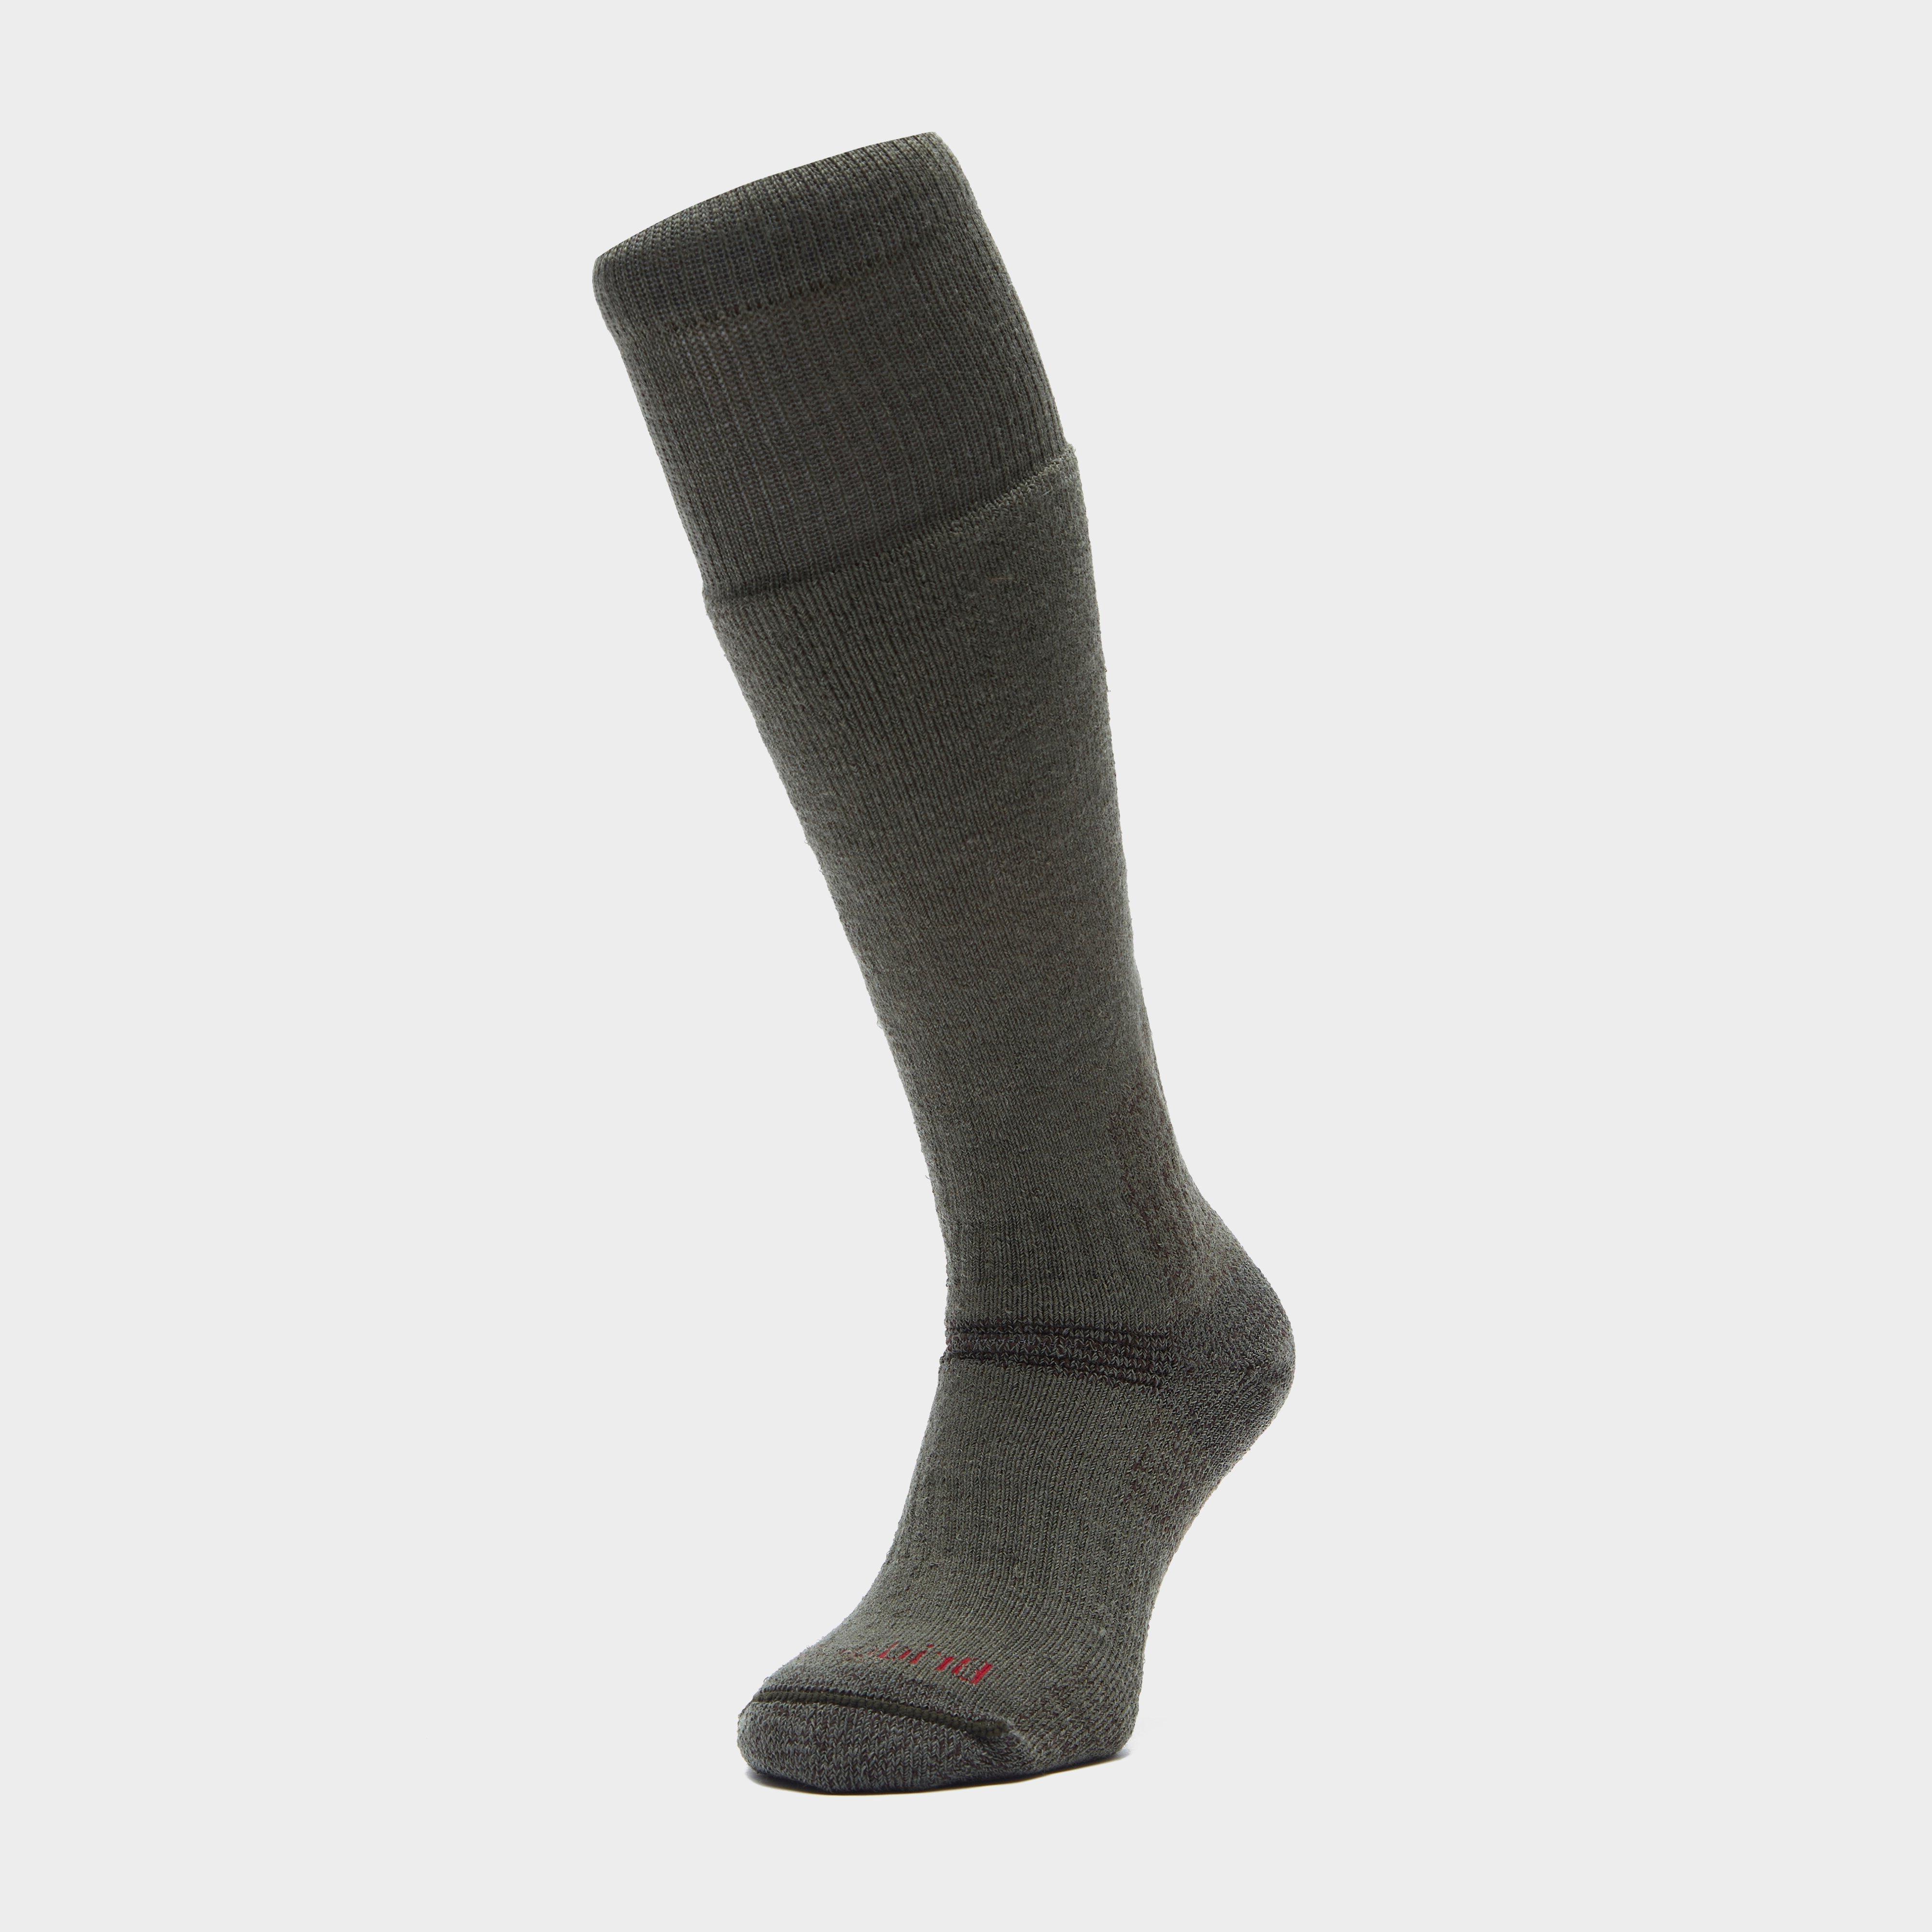  Bridgedale Explorer Heavyweight Merino Endurance Boot Sock, Green